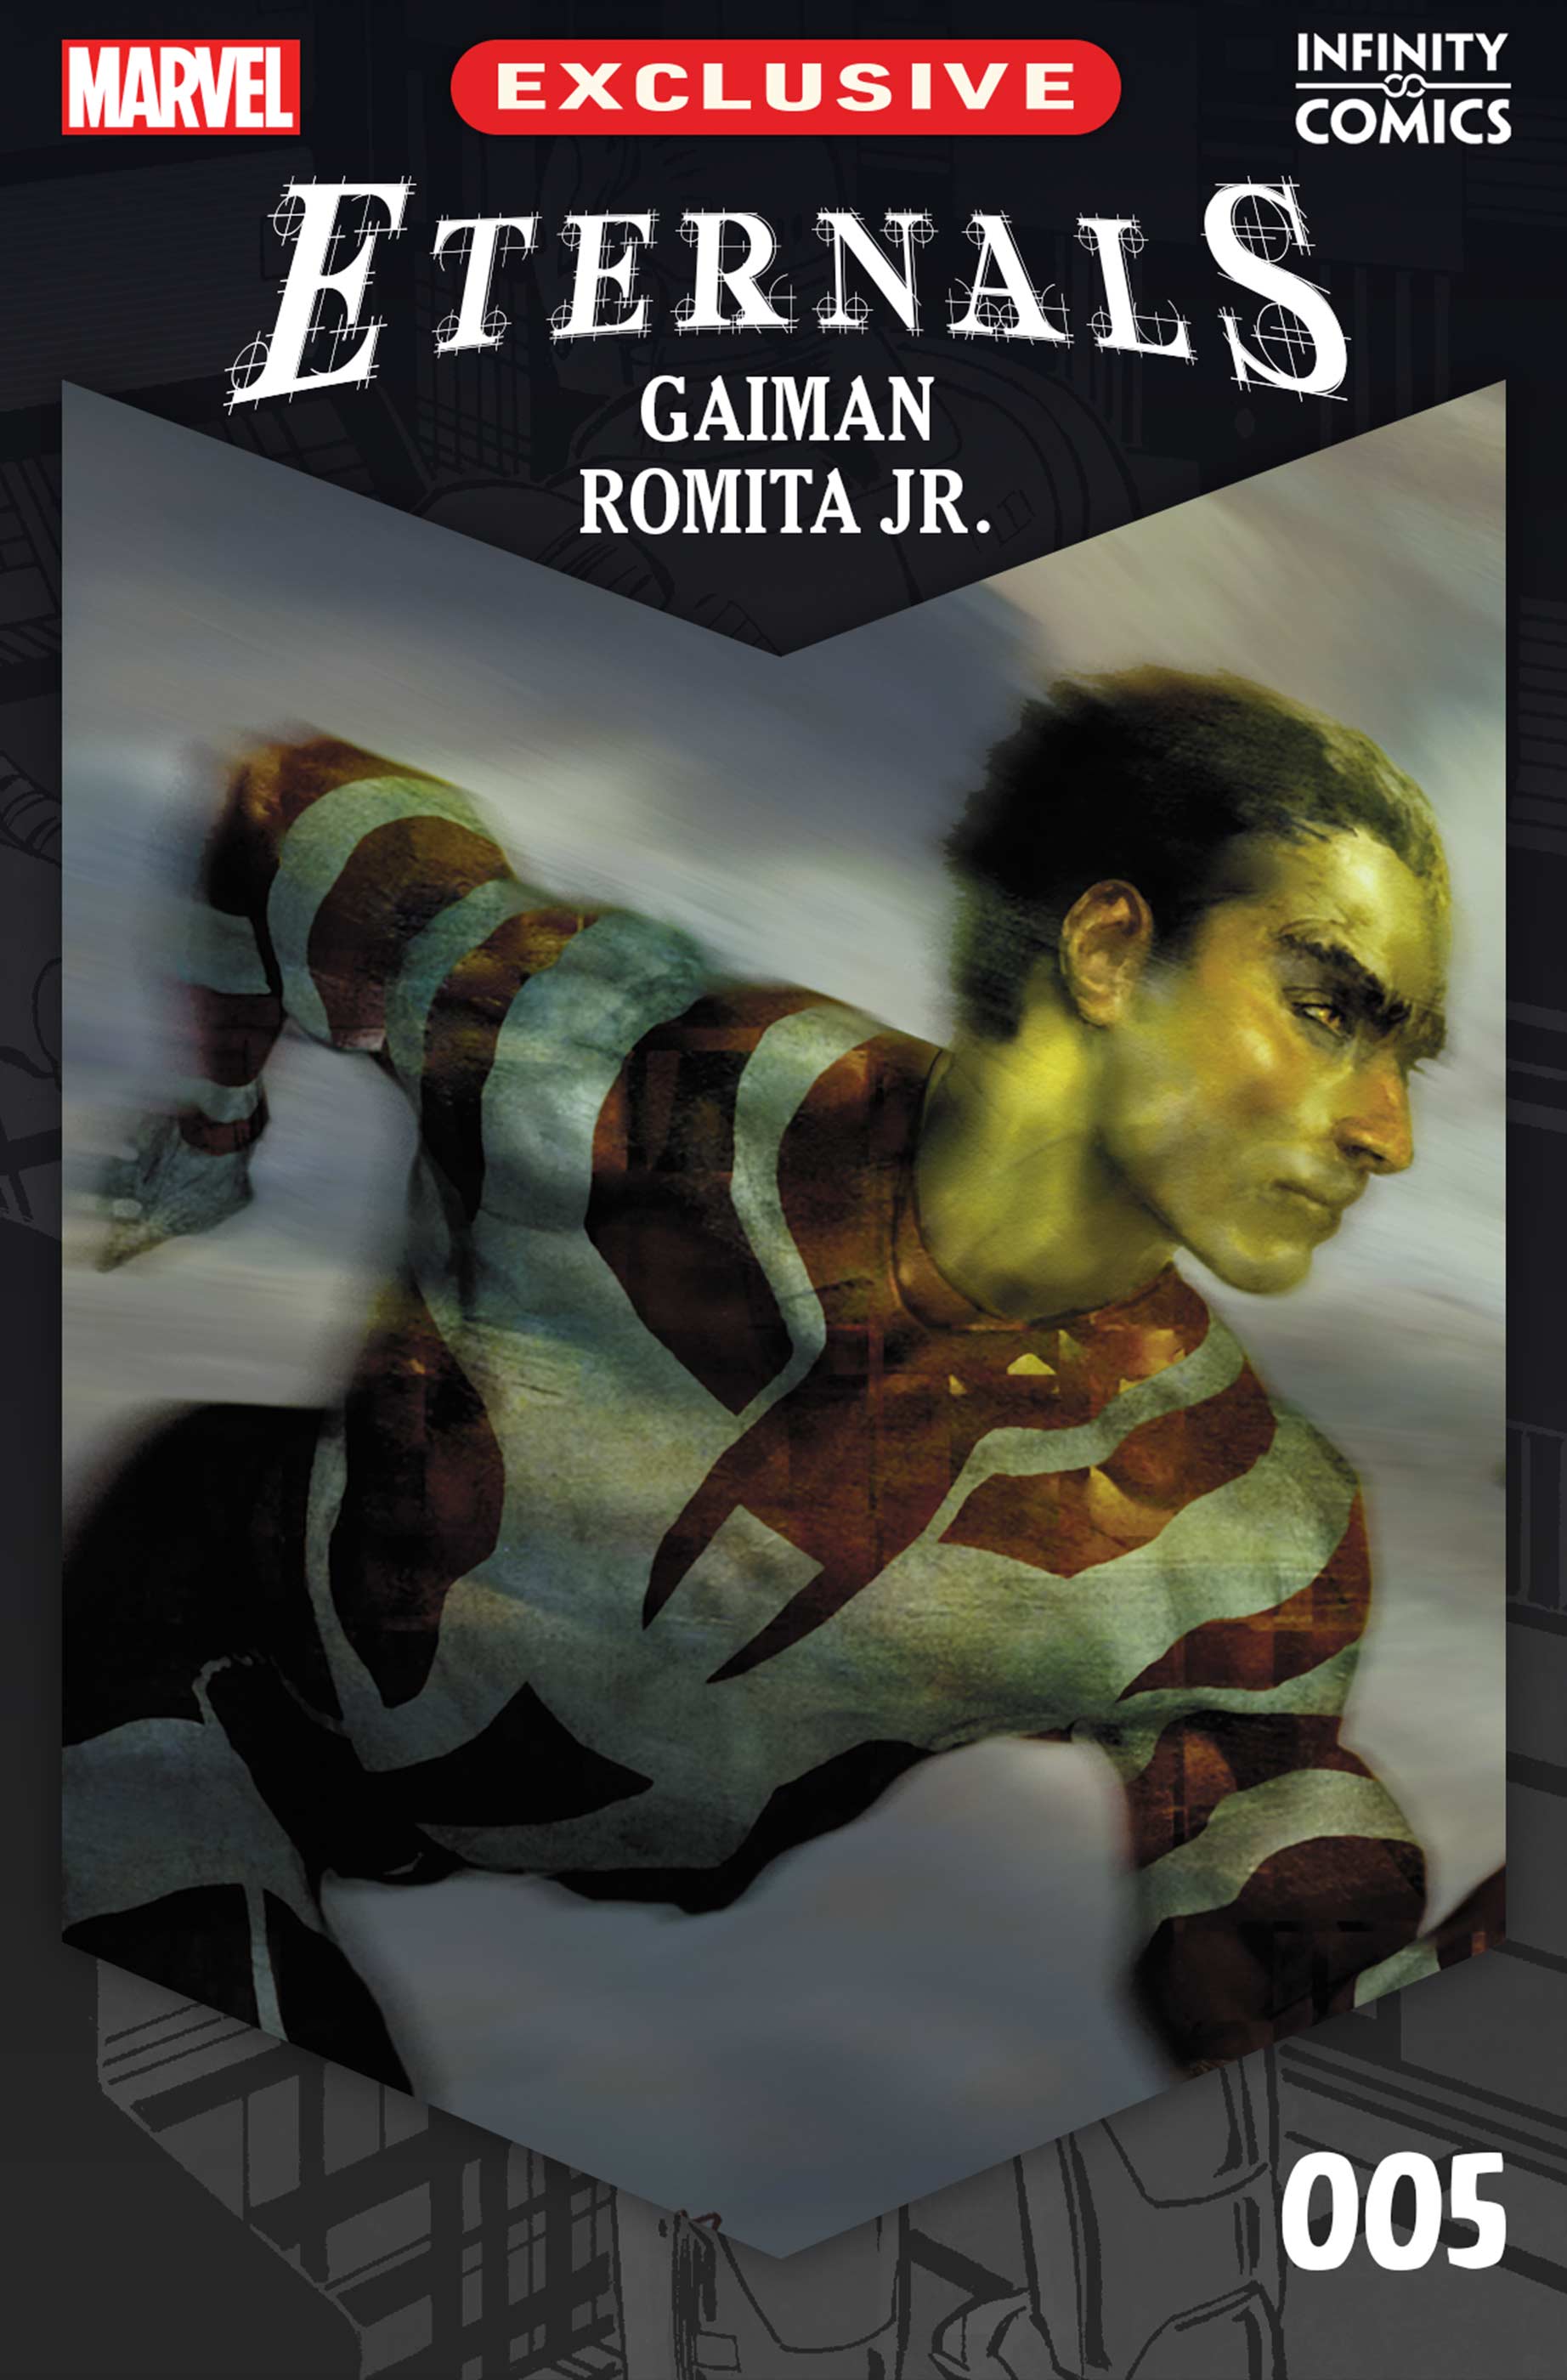 Eternals by Gaiman & Romita Jr. Infinity Comic (2022) #5